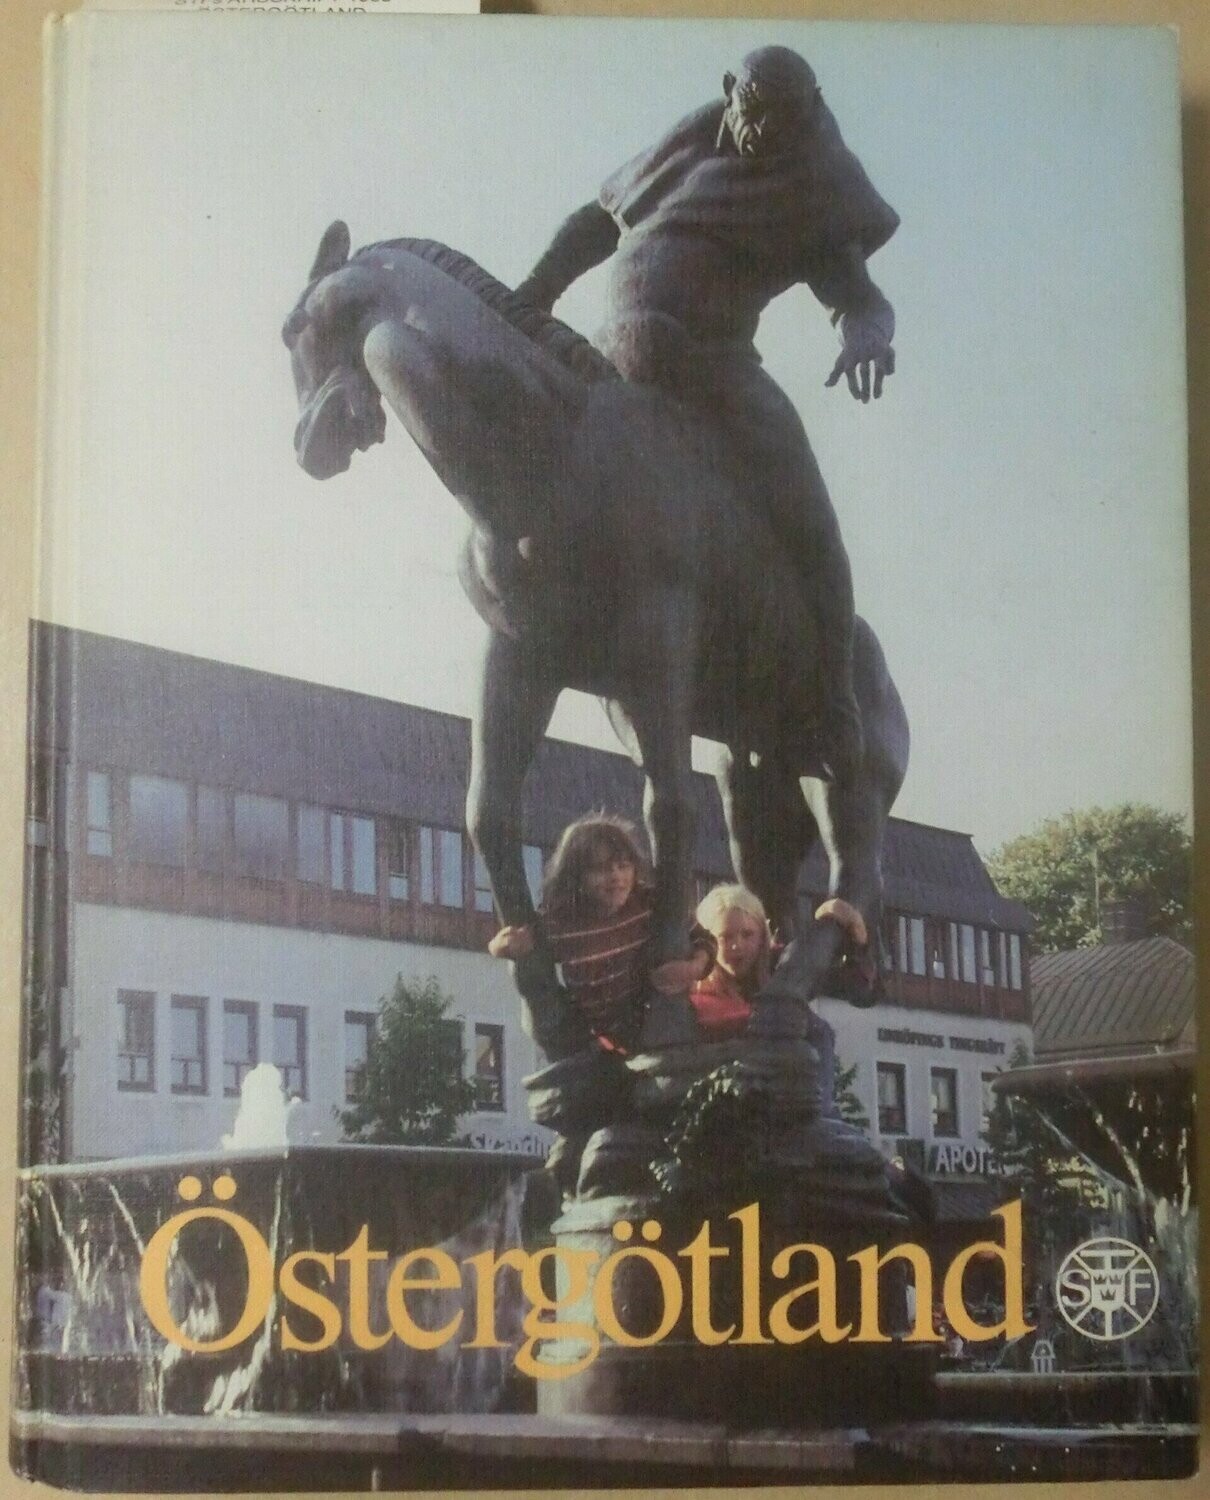 STF årsskrift 1983 - Östergötland